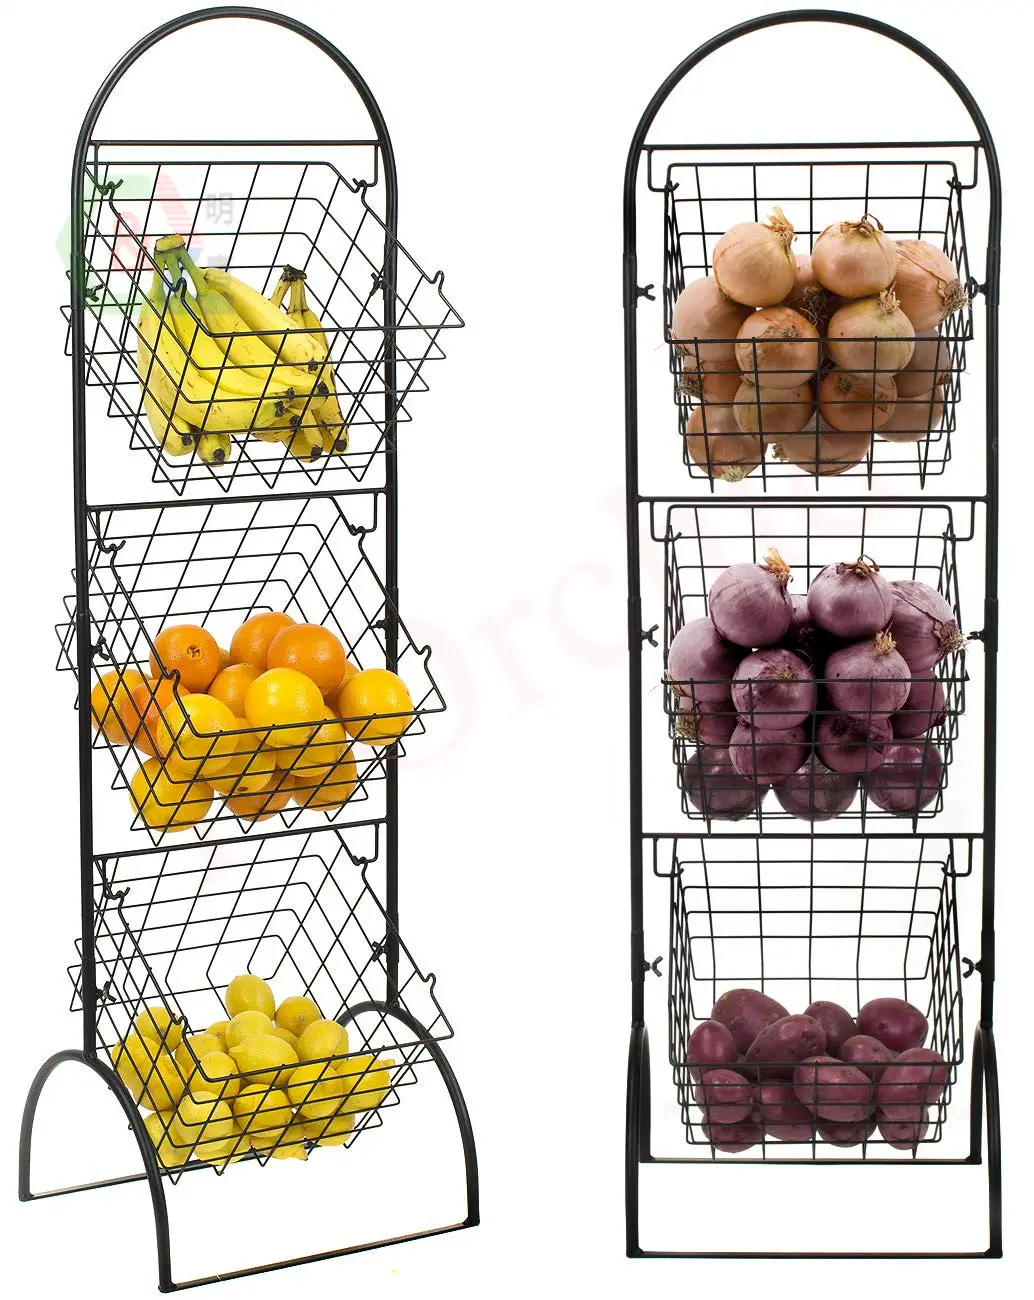 3-Tier Wire Market Basket Storage Stand für Fruit, Vegetables, Toiletries, Household Items, Stylish Tiered Serving Stand Baskets